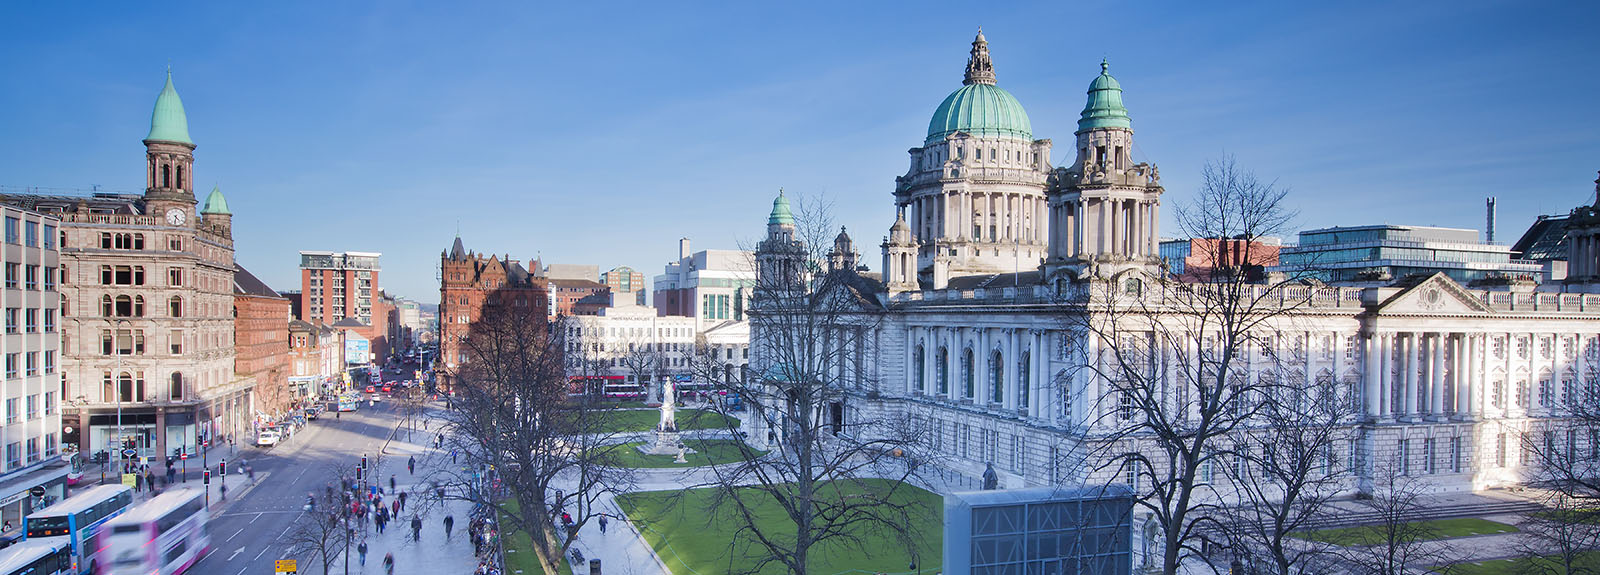 Belfast City Hall and grounds